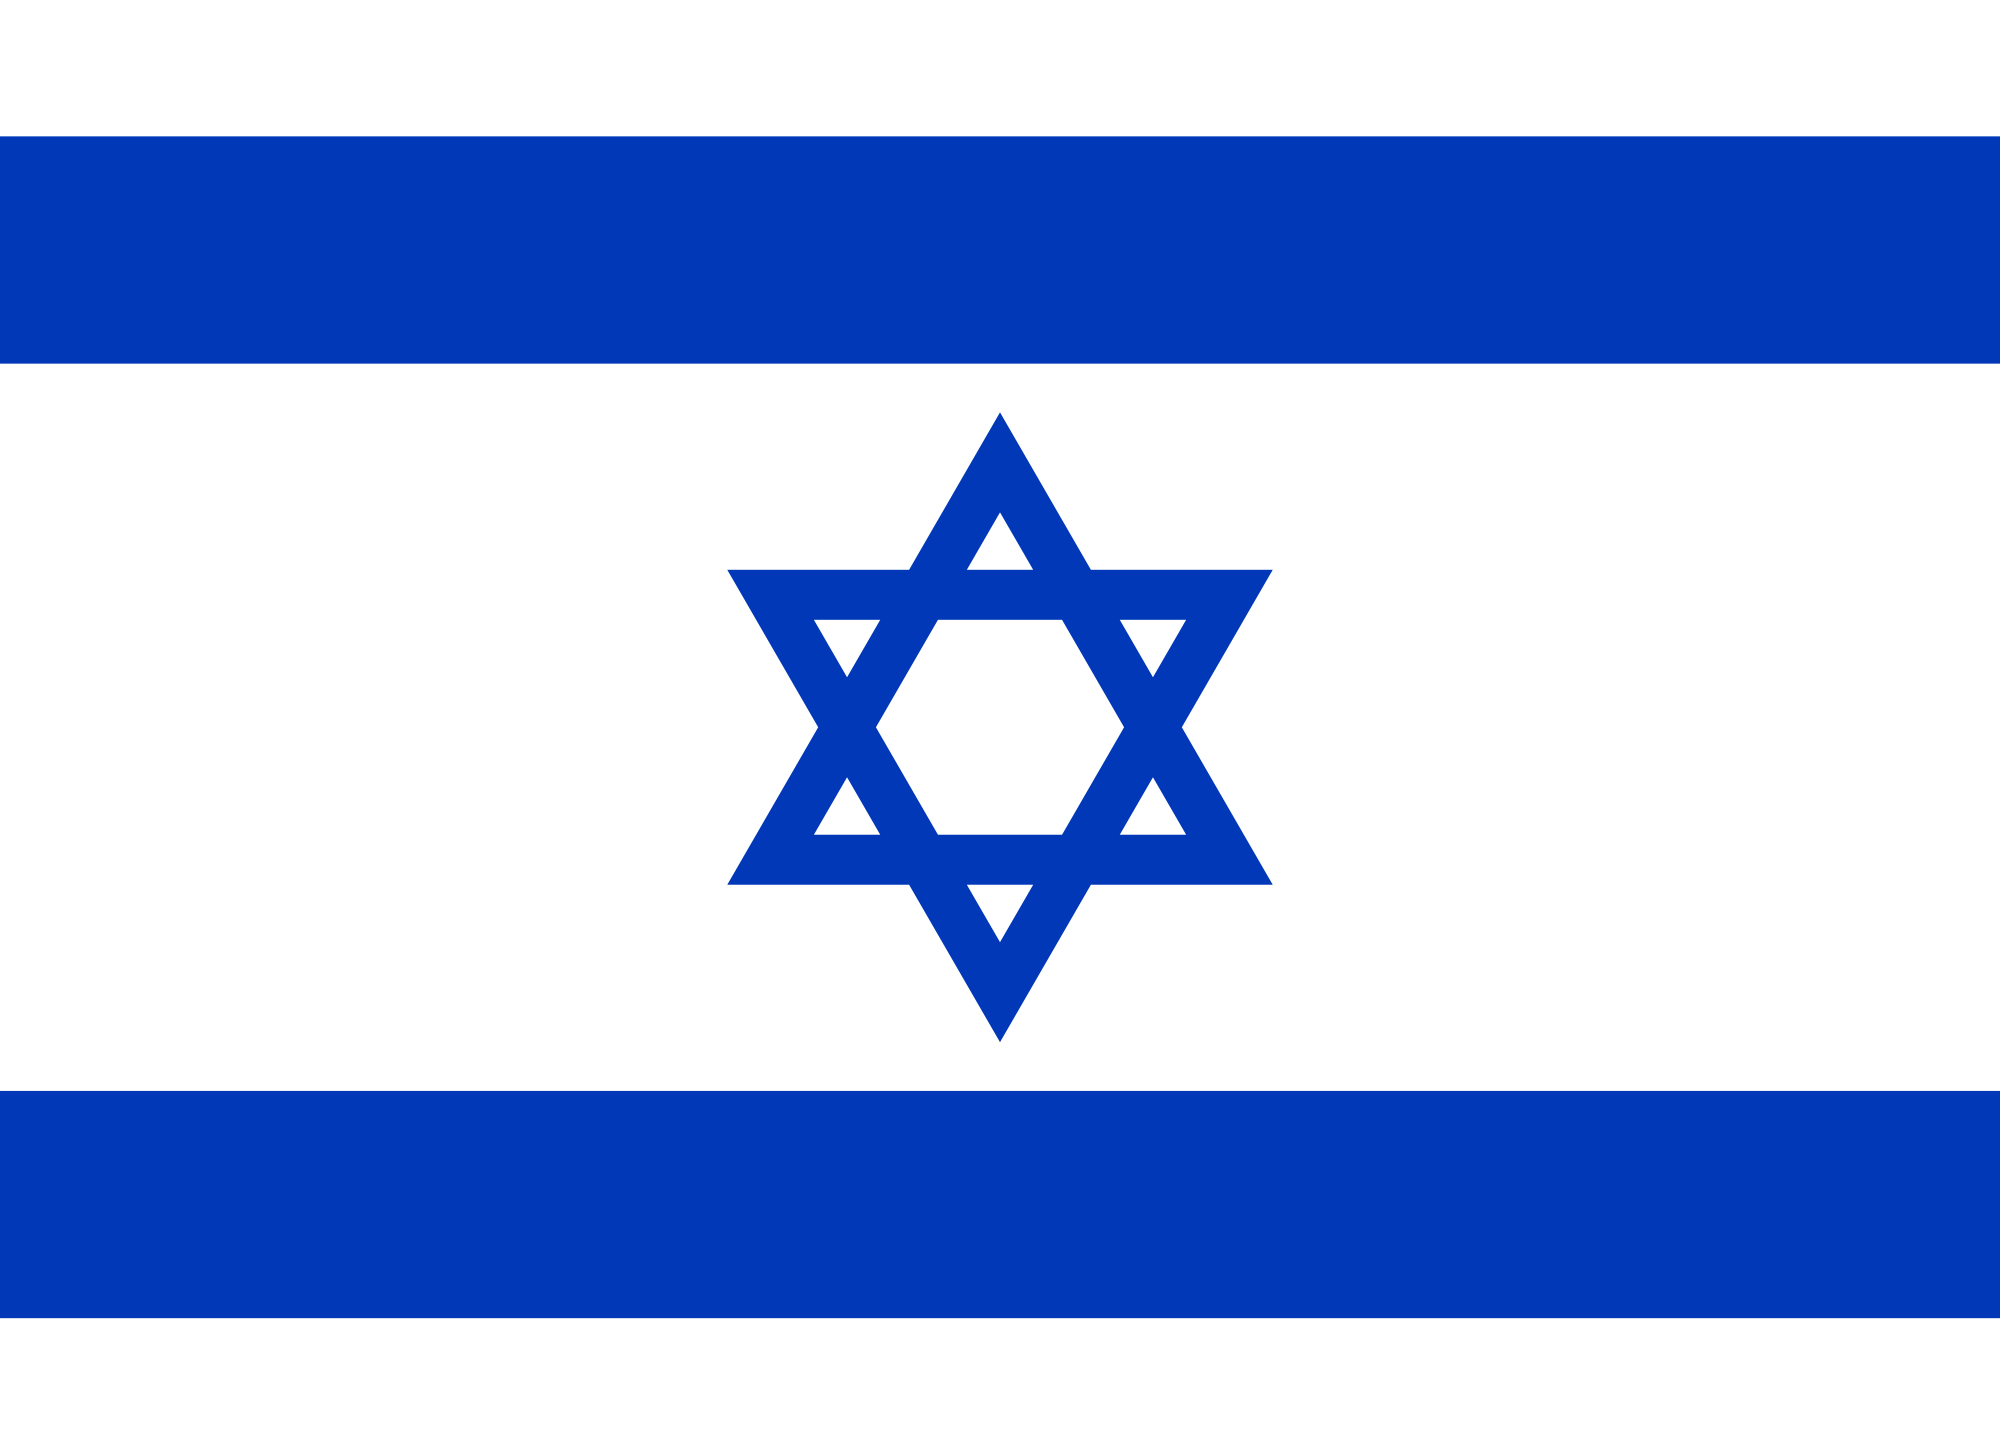 2000px-Flag_of_Israel.svg.png